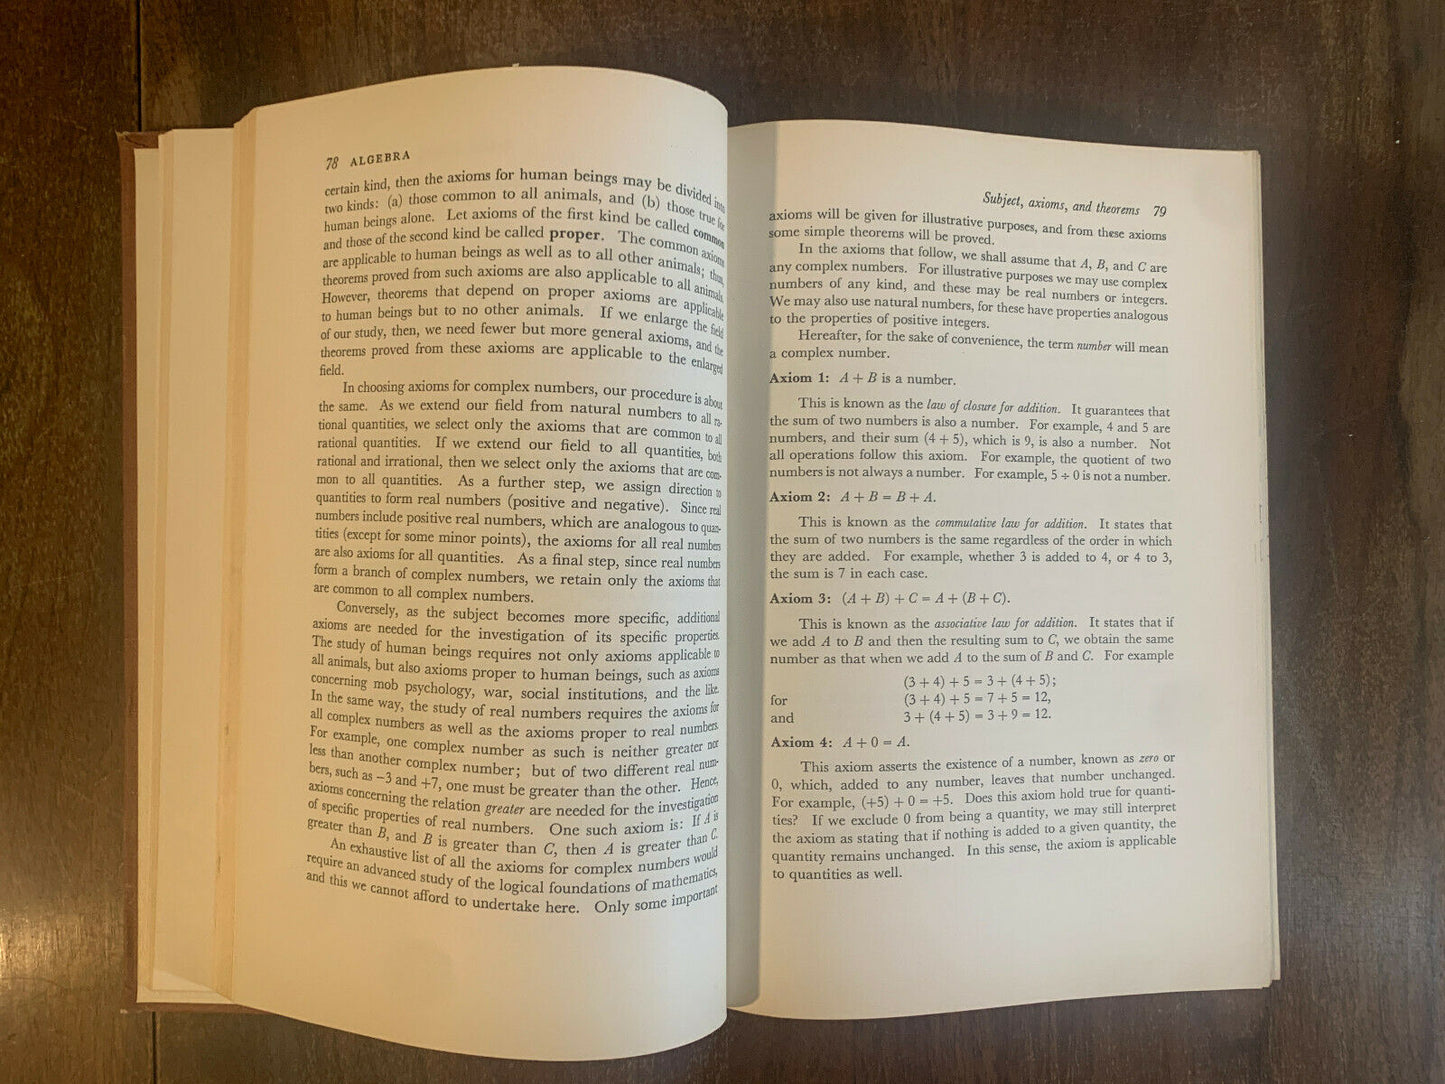 A Survey of Basic Mathematics by H. G. Apostle 1960 (Z2)